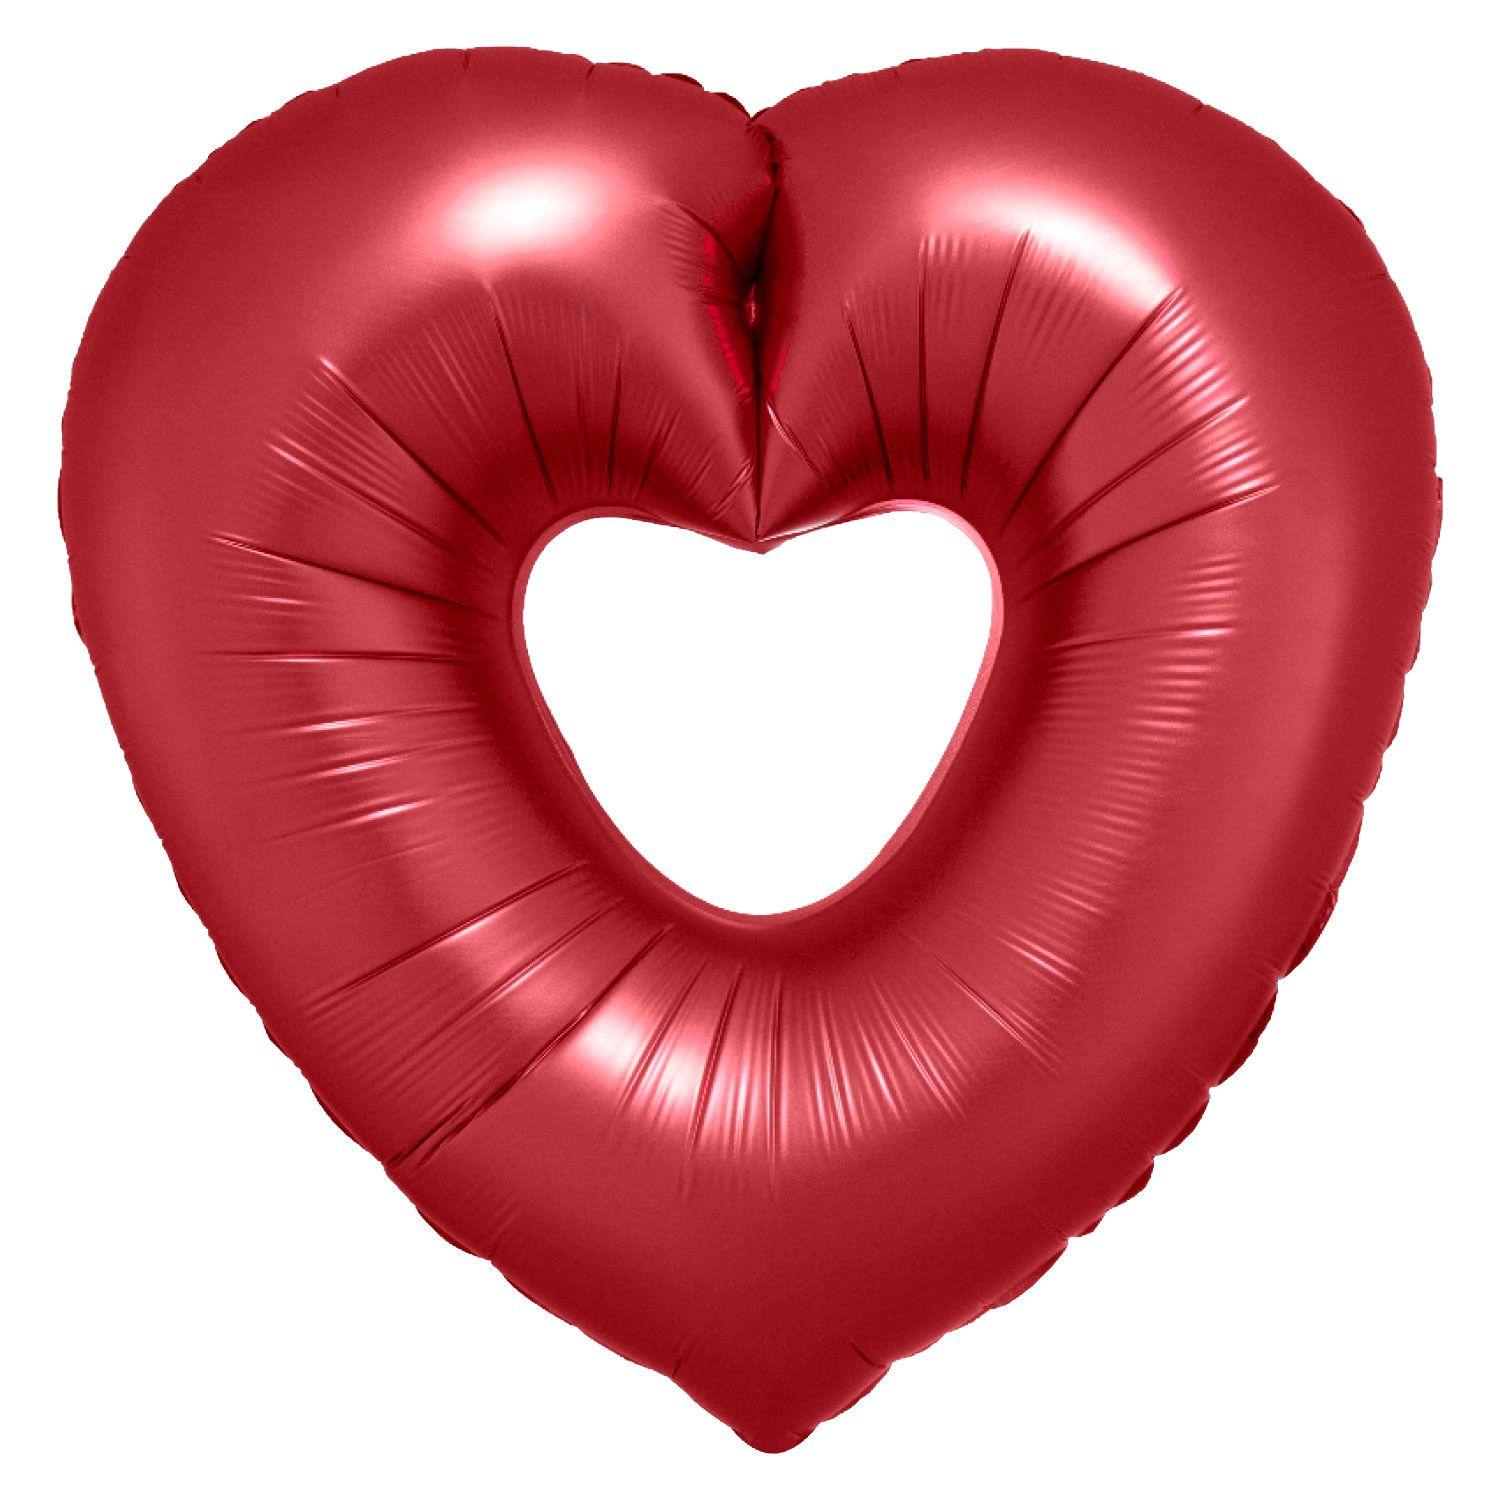 Red Open Heart Logo - Red Open Heart Super Shape Balloon Valentine's Day Love Romantic